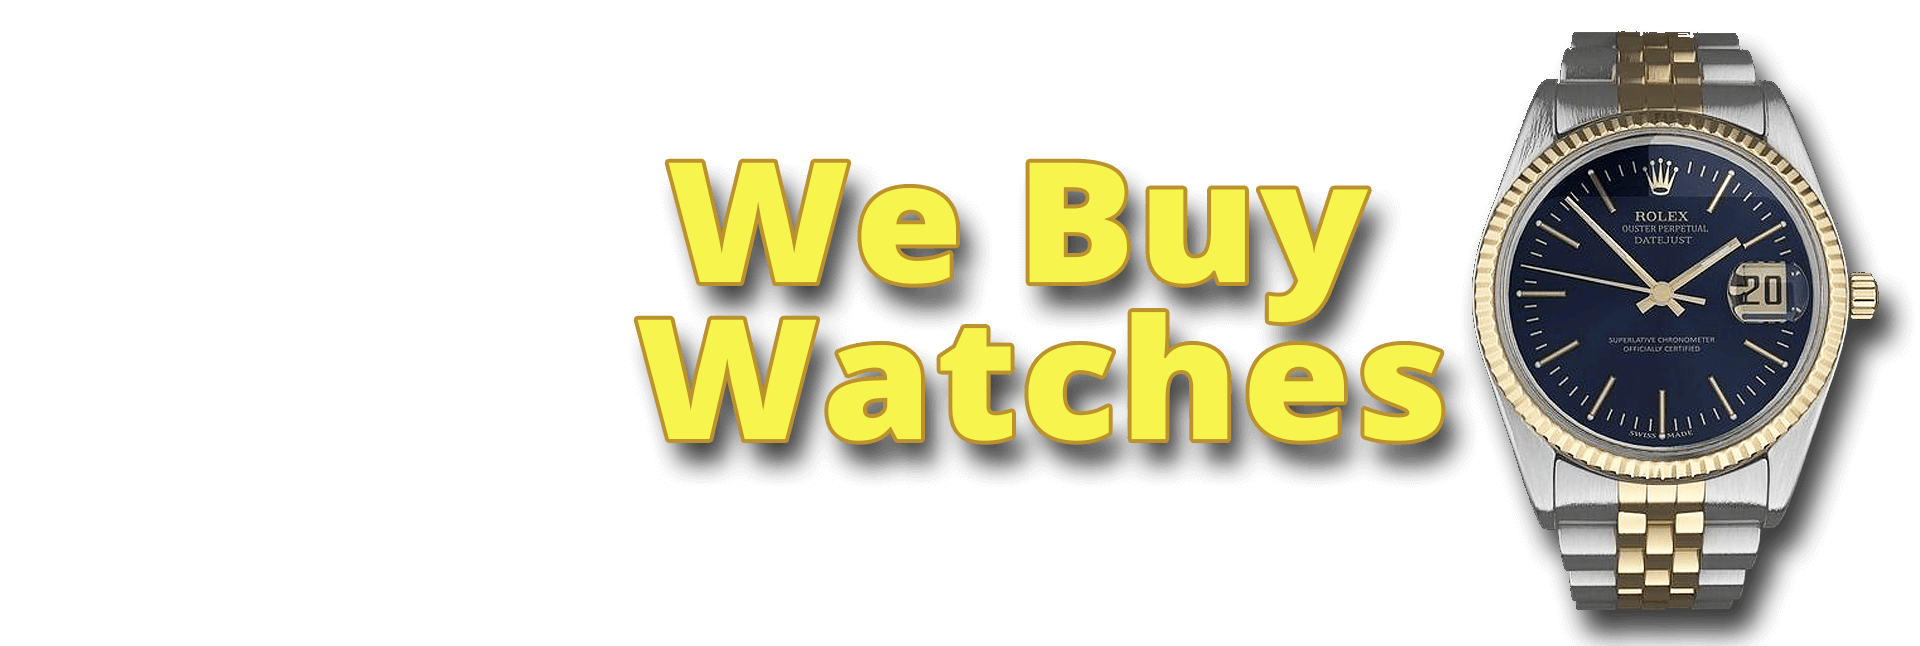 We Buy Old Watches - Denton, Watauga